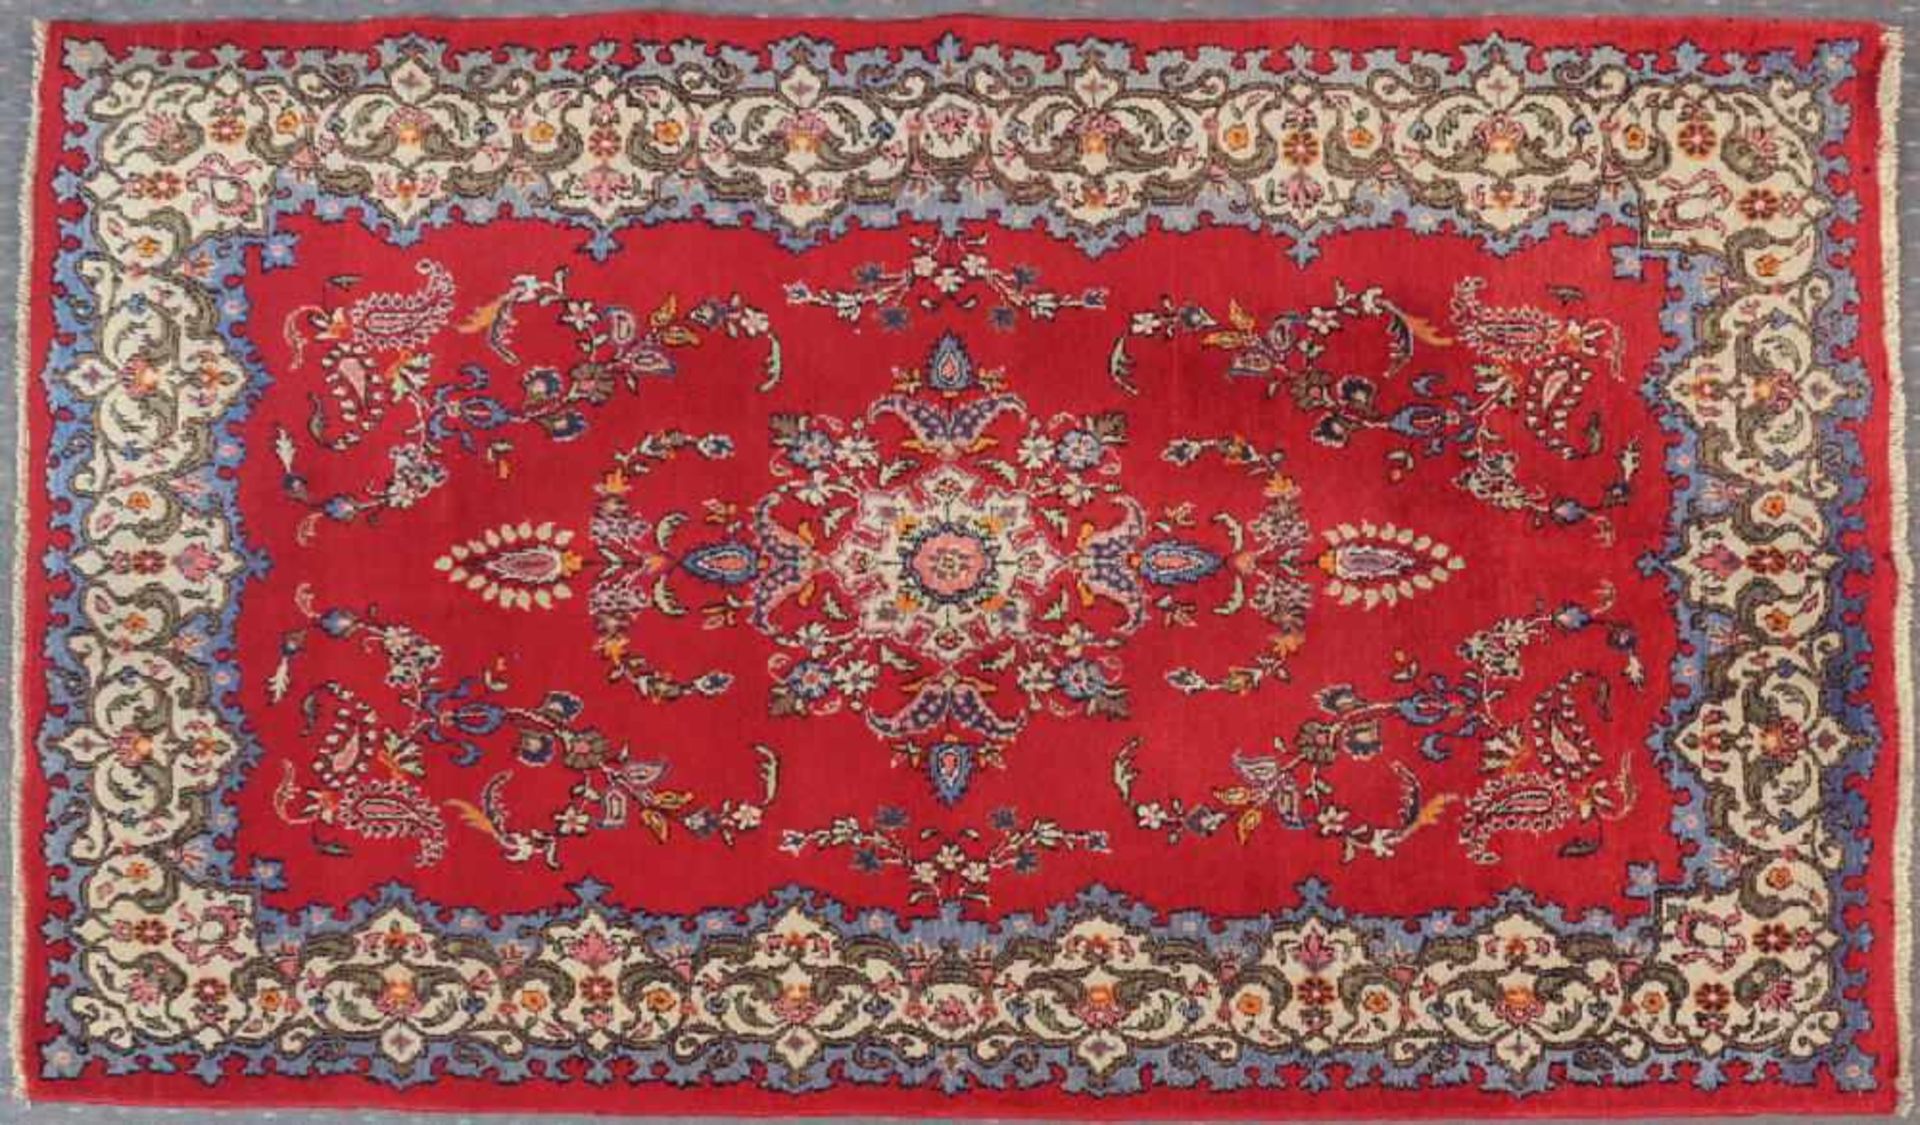 Kirman-Royal, Persien, 134 x 204 cmälter, Wolle, rotgrundig, mehrfarb. Mittelstück, umgeben von